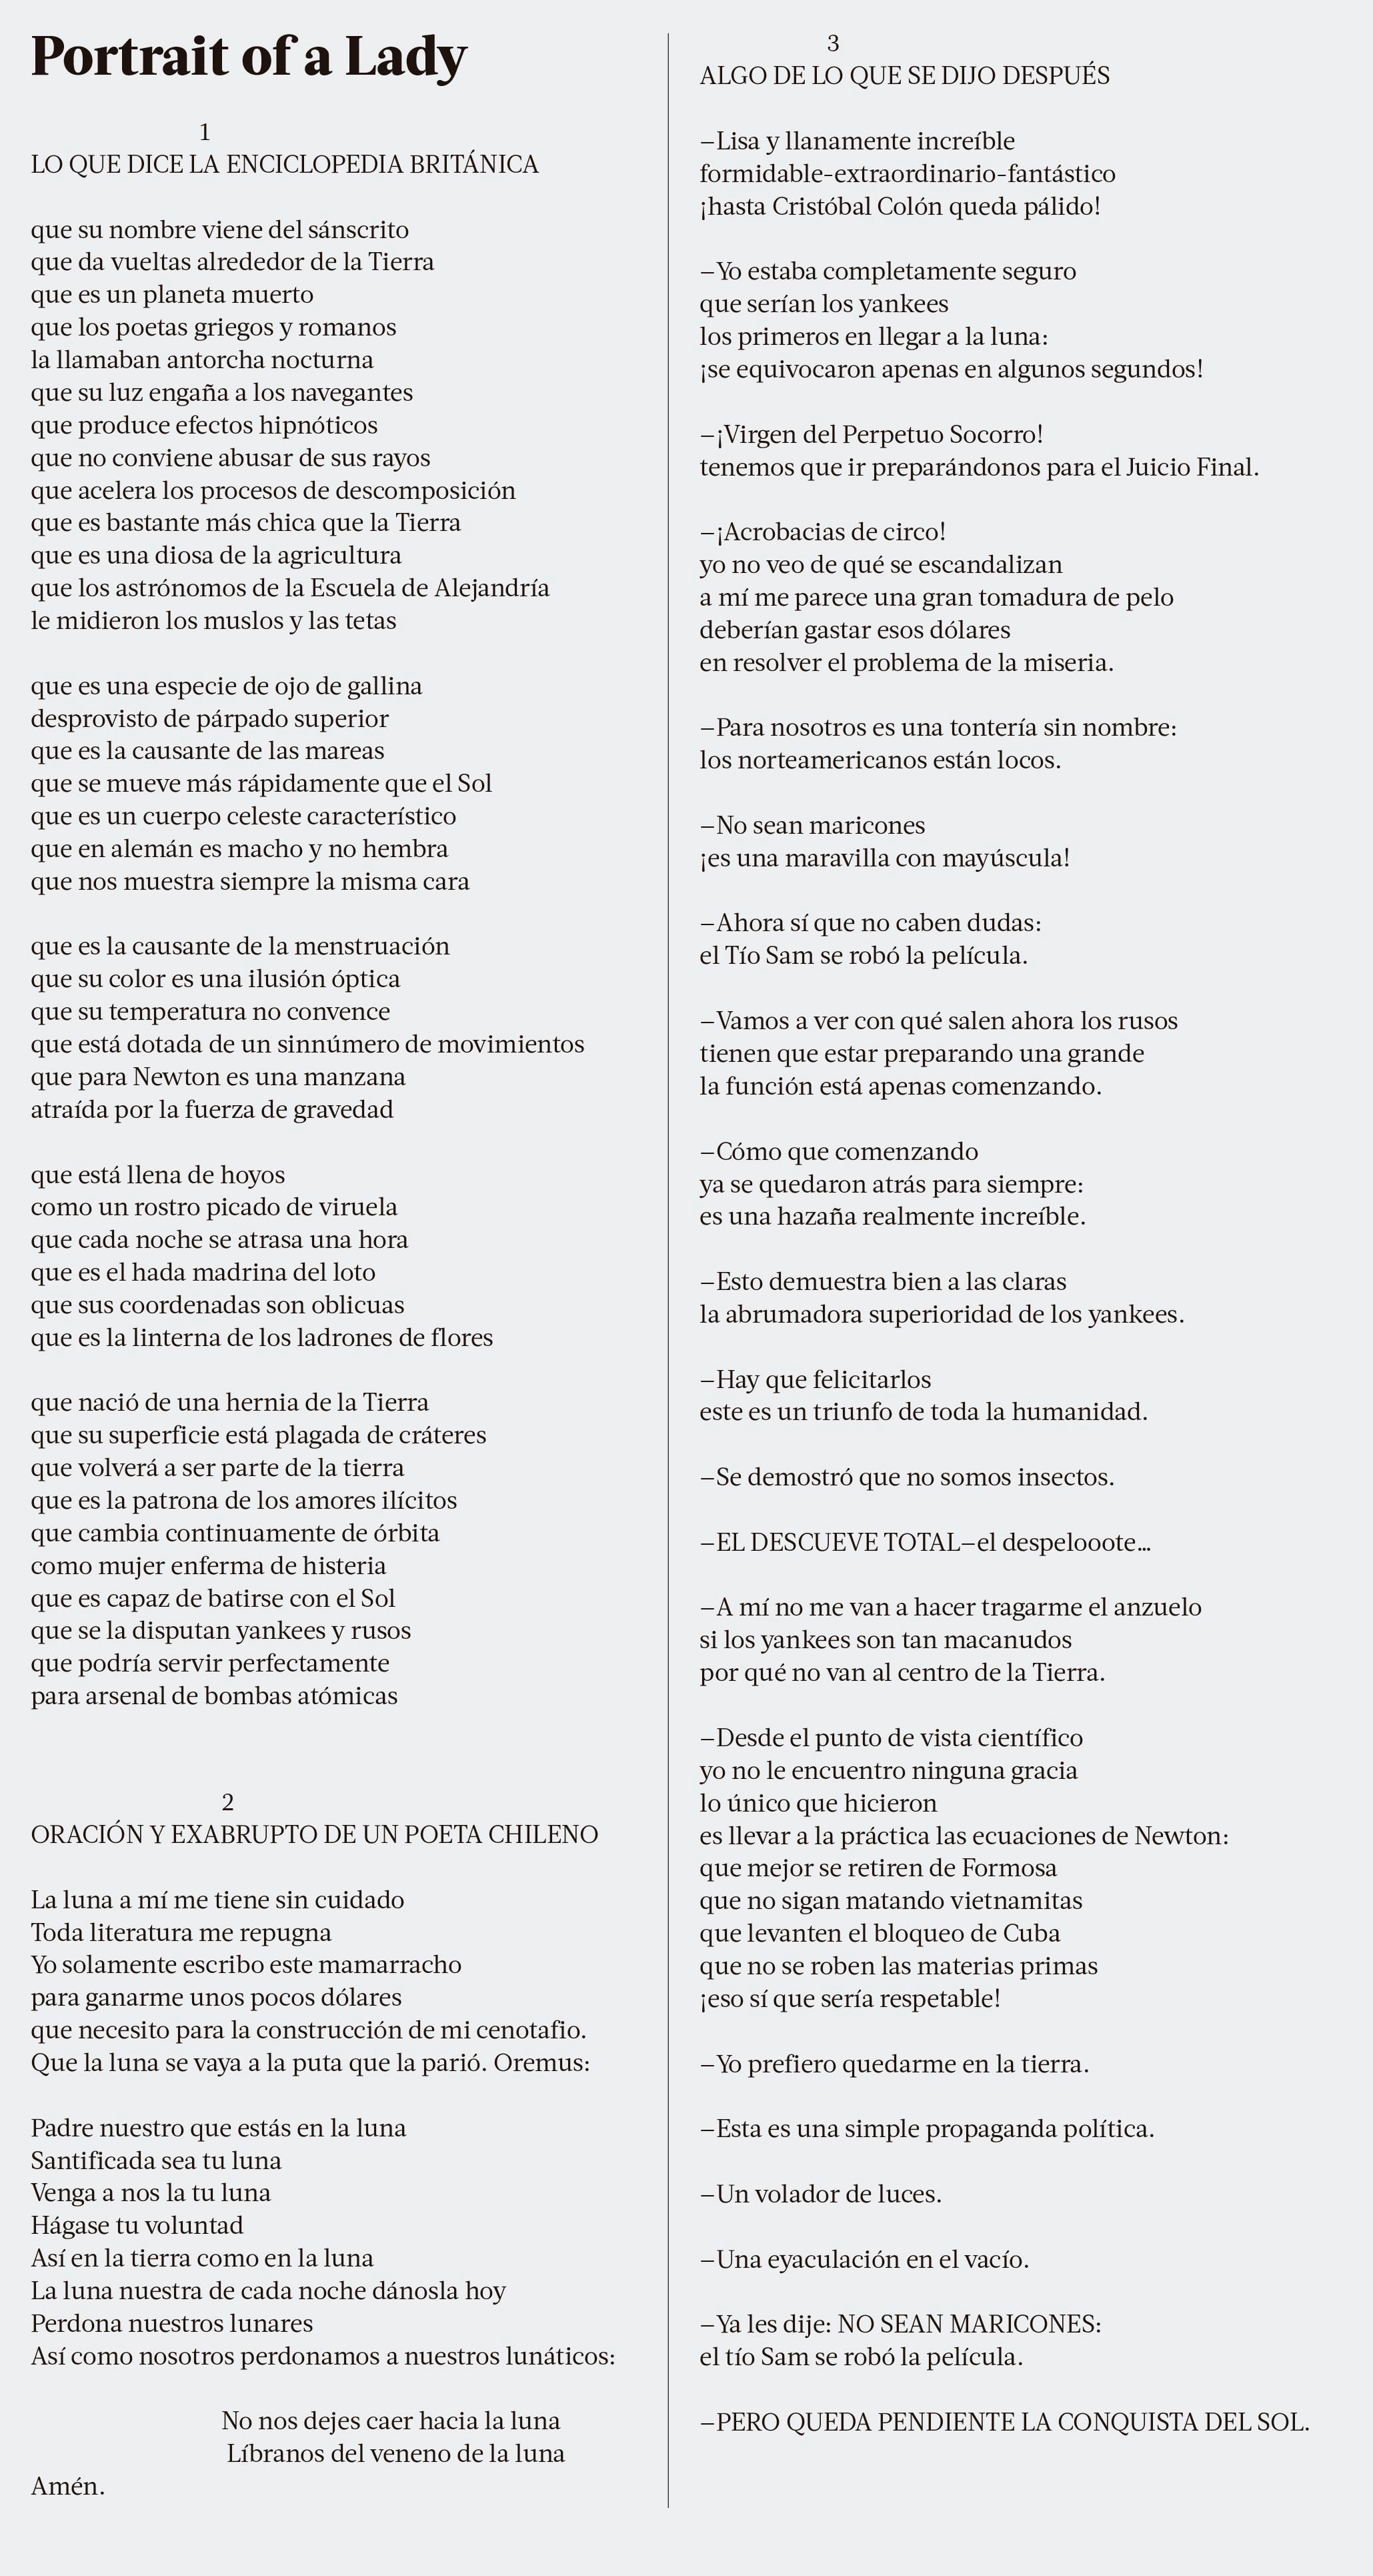 Poema Portrait of a Lady, de Nicanor Parra